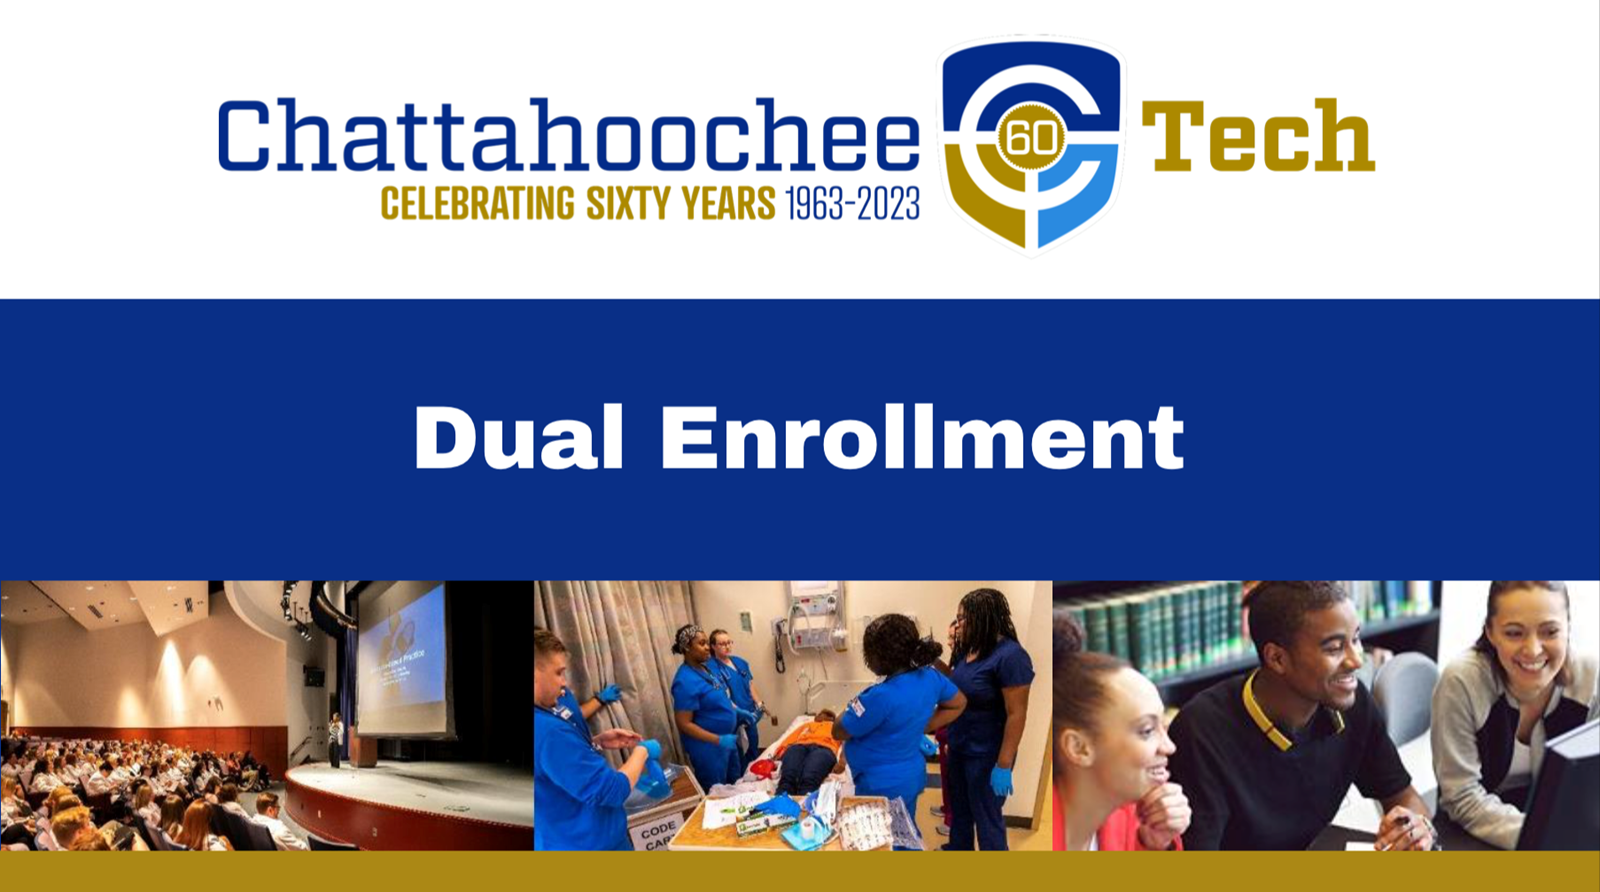 Chattahoochee Tech - Dual Enrollment Summit